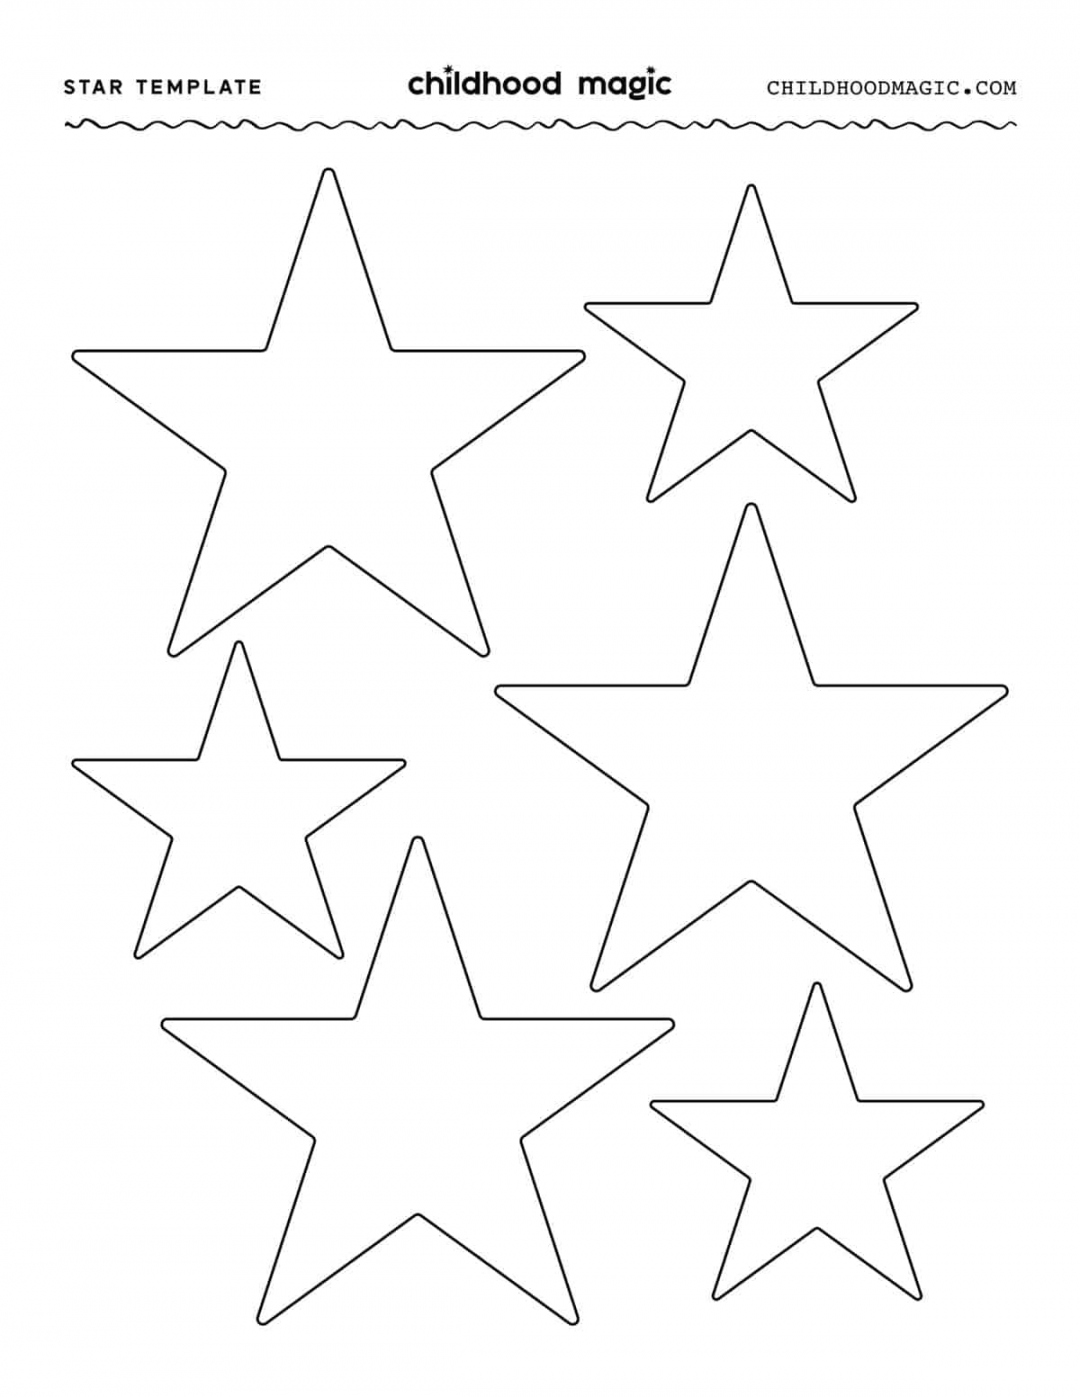 Star Shape Template - Free Printable - Childhood Magic - FREE Printables - Star Template Printable Free